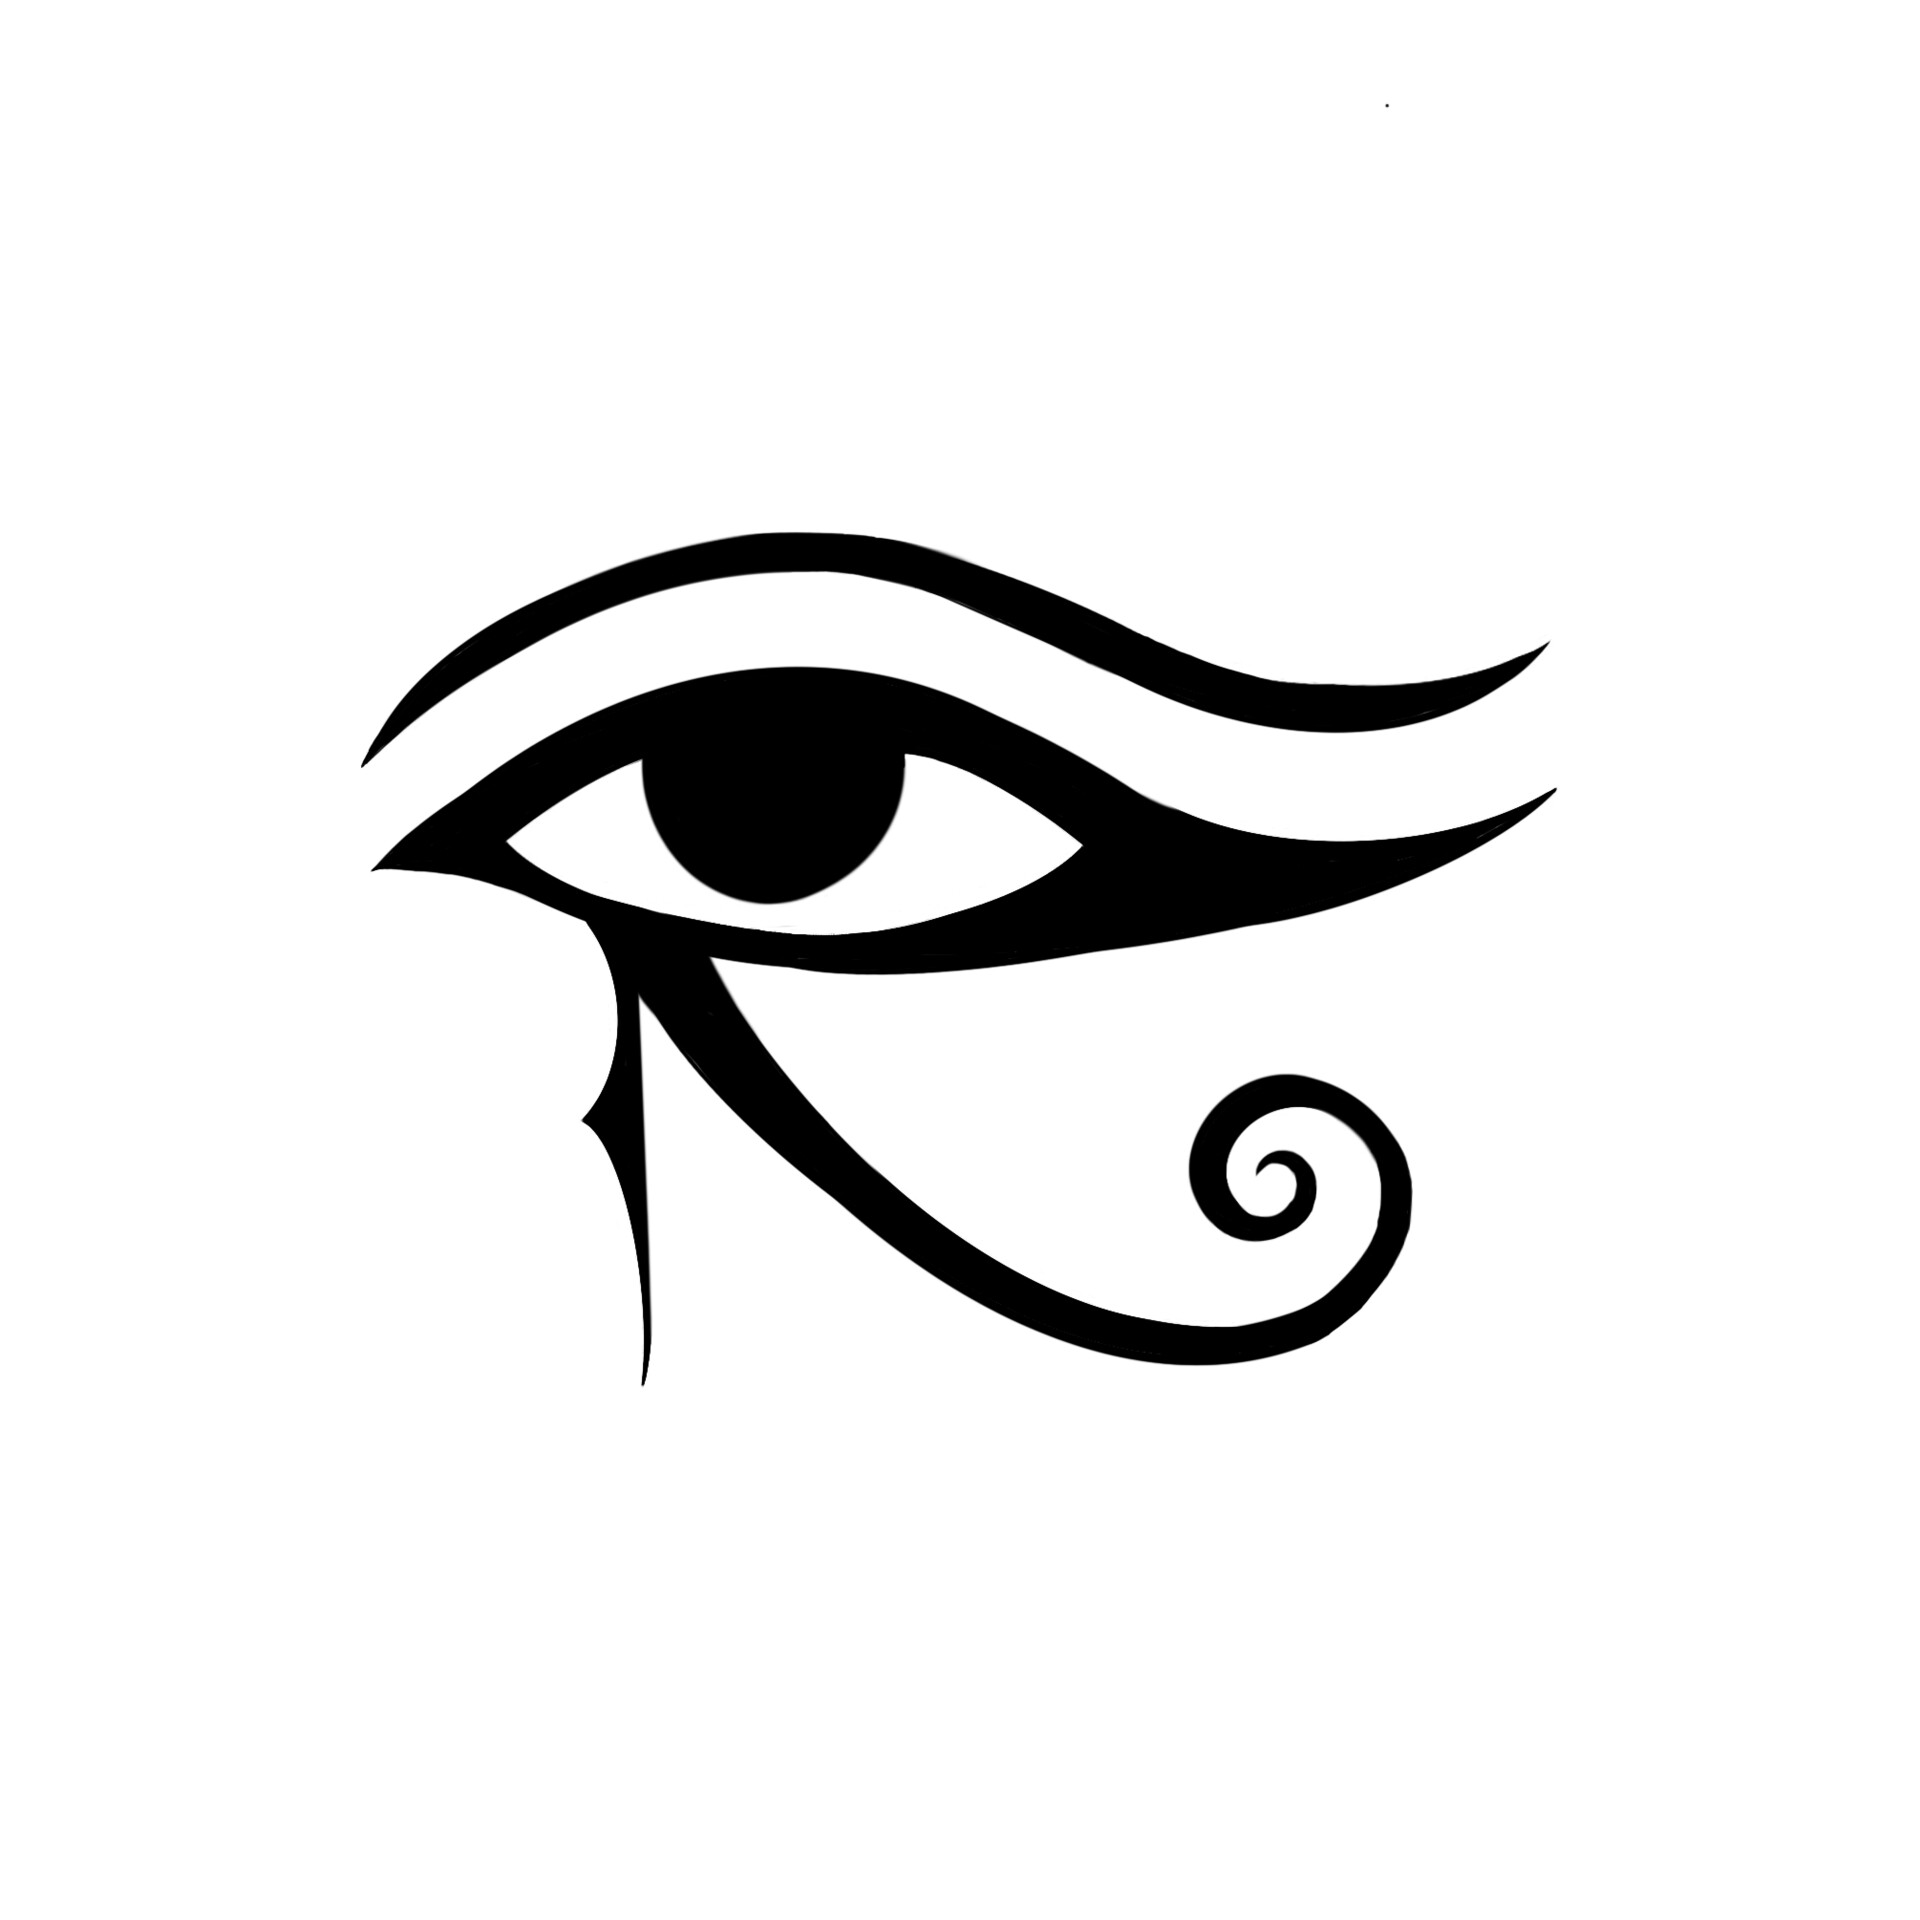 Eye of horus logo design ancient egyptian sign Vector Image